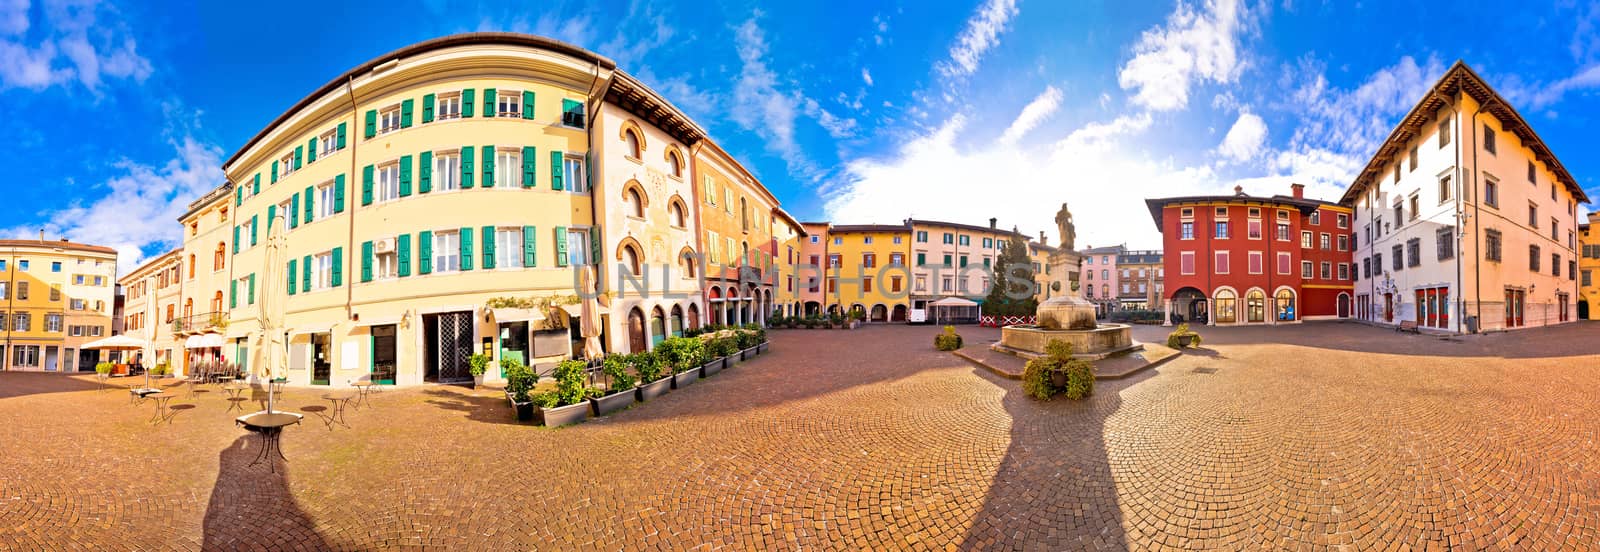 Town of Cividale del Friuli colorful Italian square panoramic view, Friuli-Venezia Giulia region of Italy